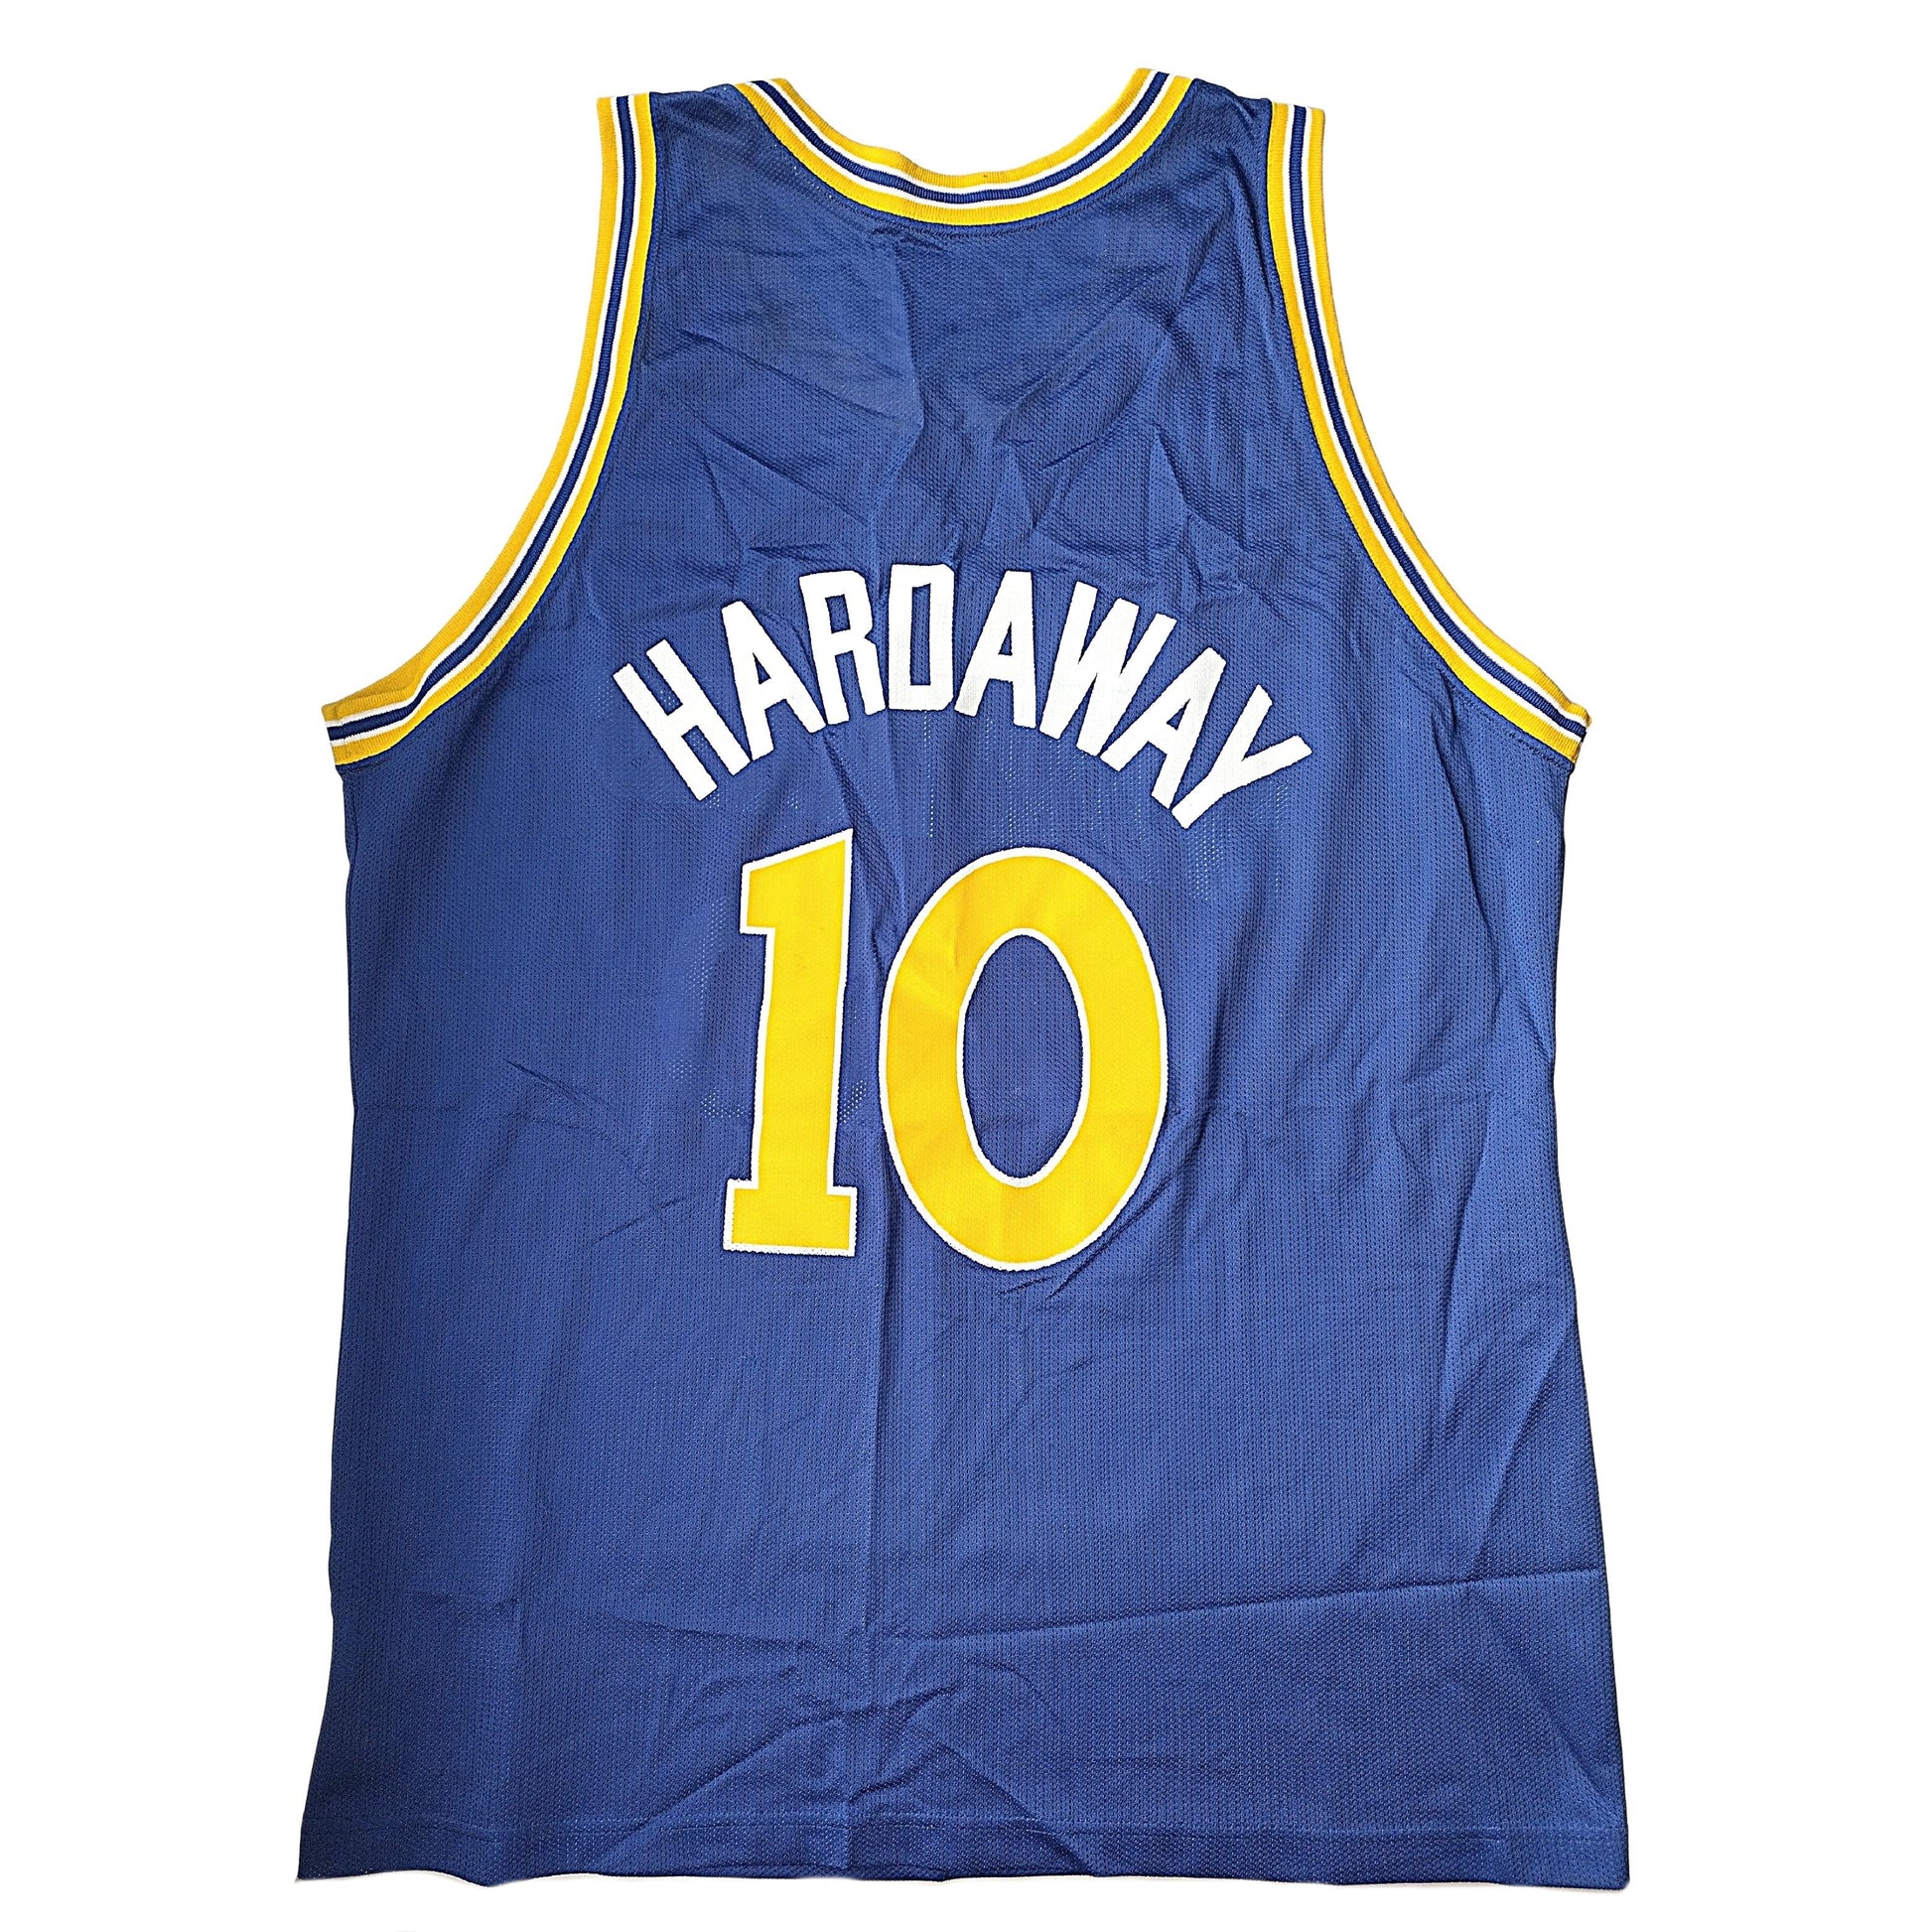 Tim Hardaway Autographed Golden State Warriors Vintage Basketball Jersey  JSA Certified